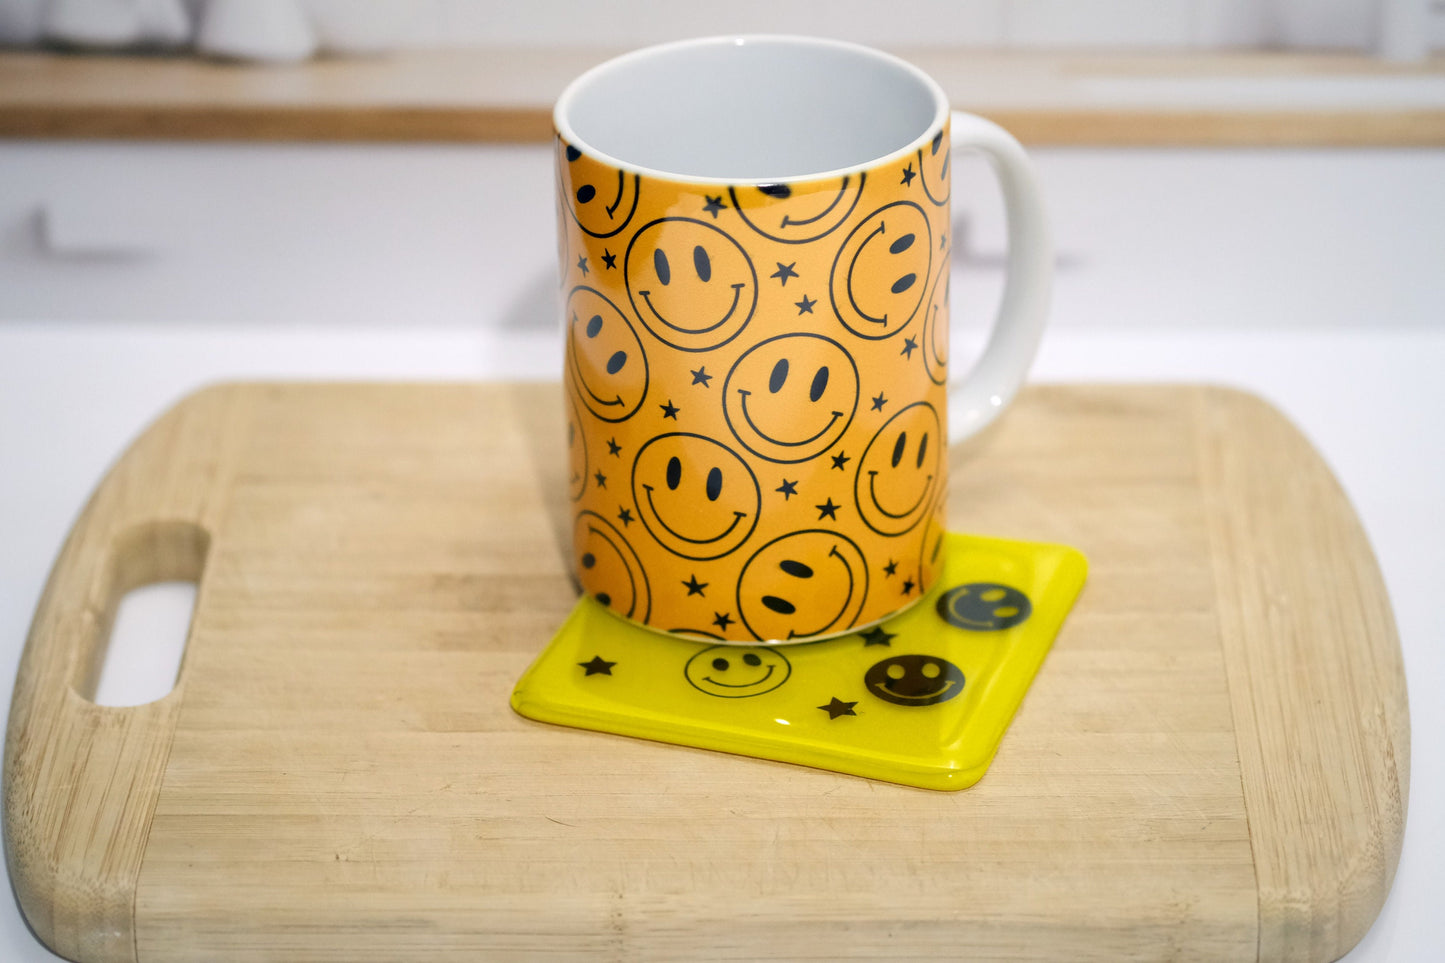 Whimsical Smiley Pattern Combo - 15 oz Mug & Fused Glass Coasters in Orange/Yellow